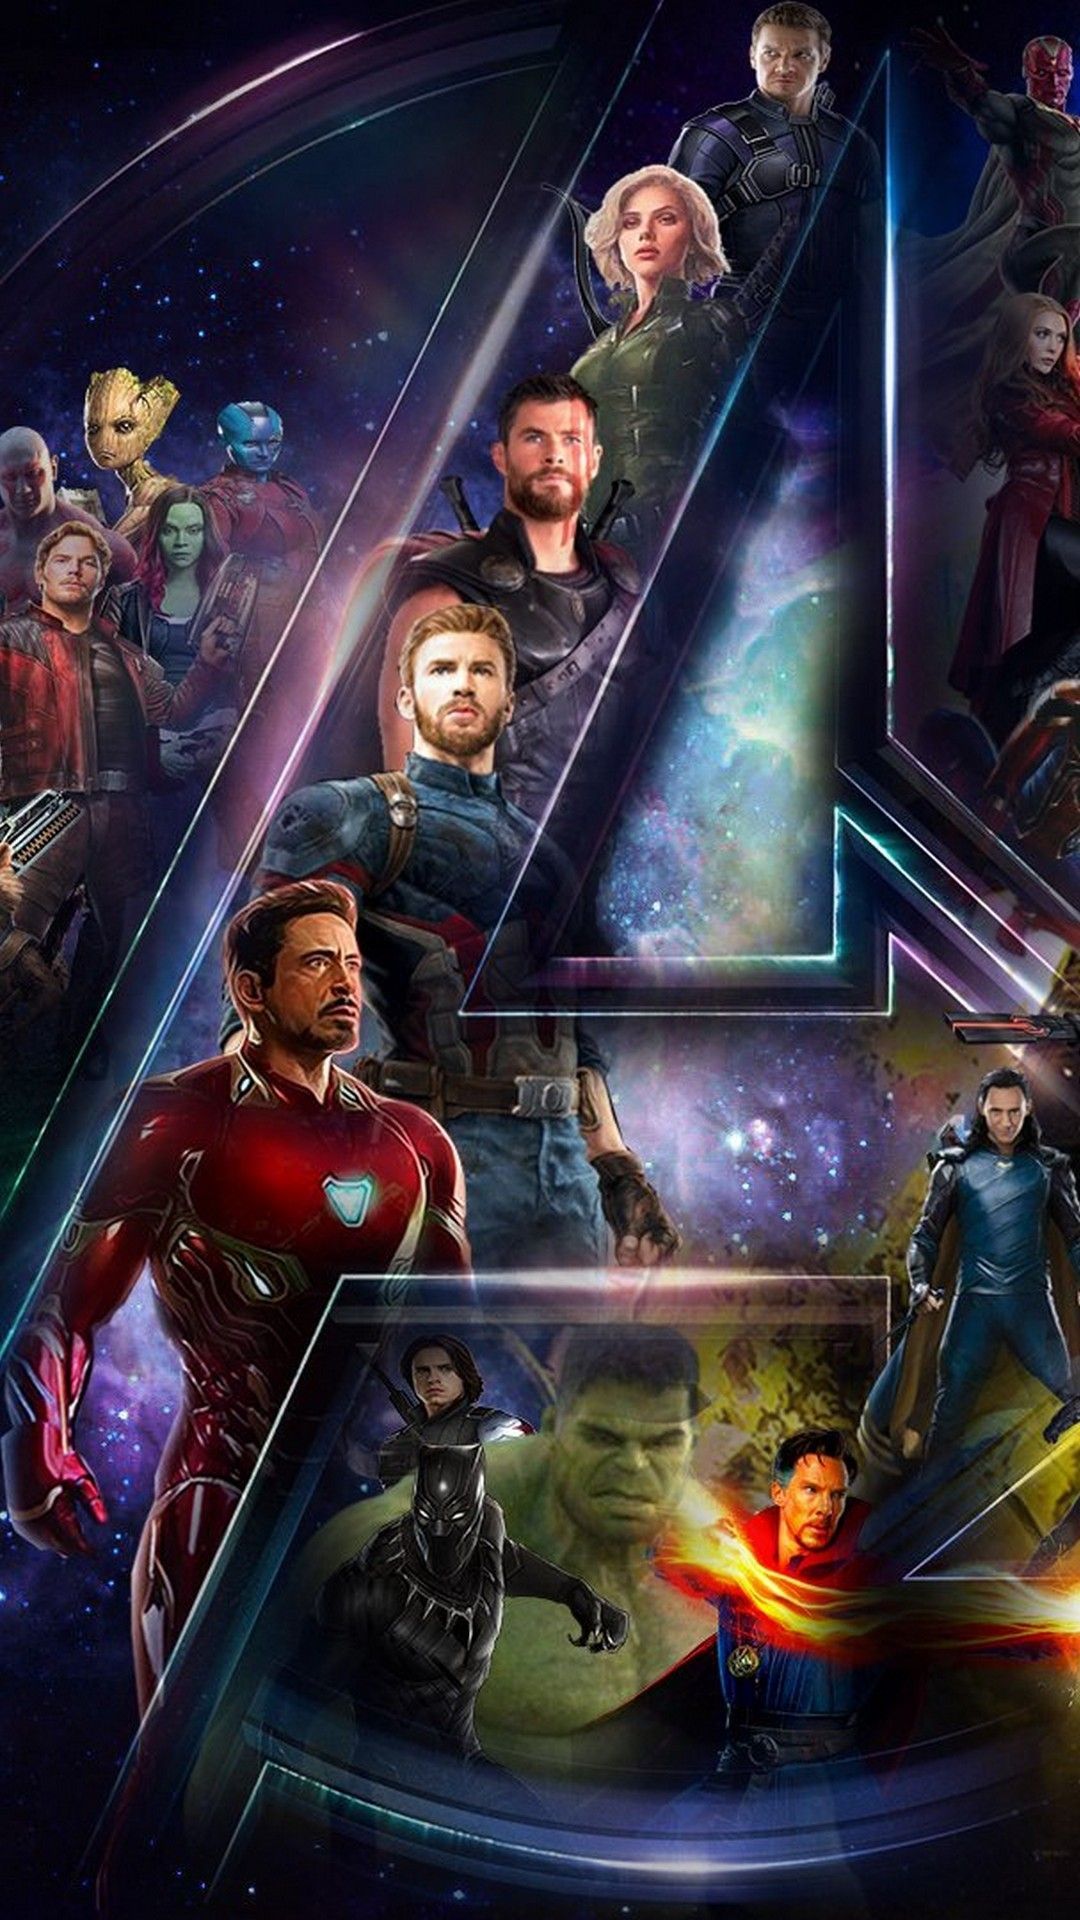 Avengers Endgame Theme Download For Android wonderever